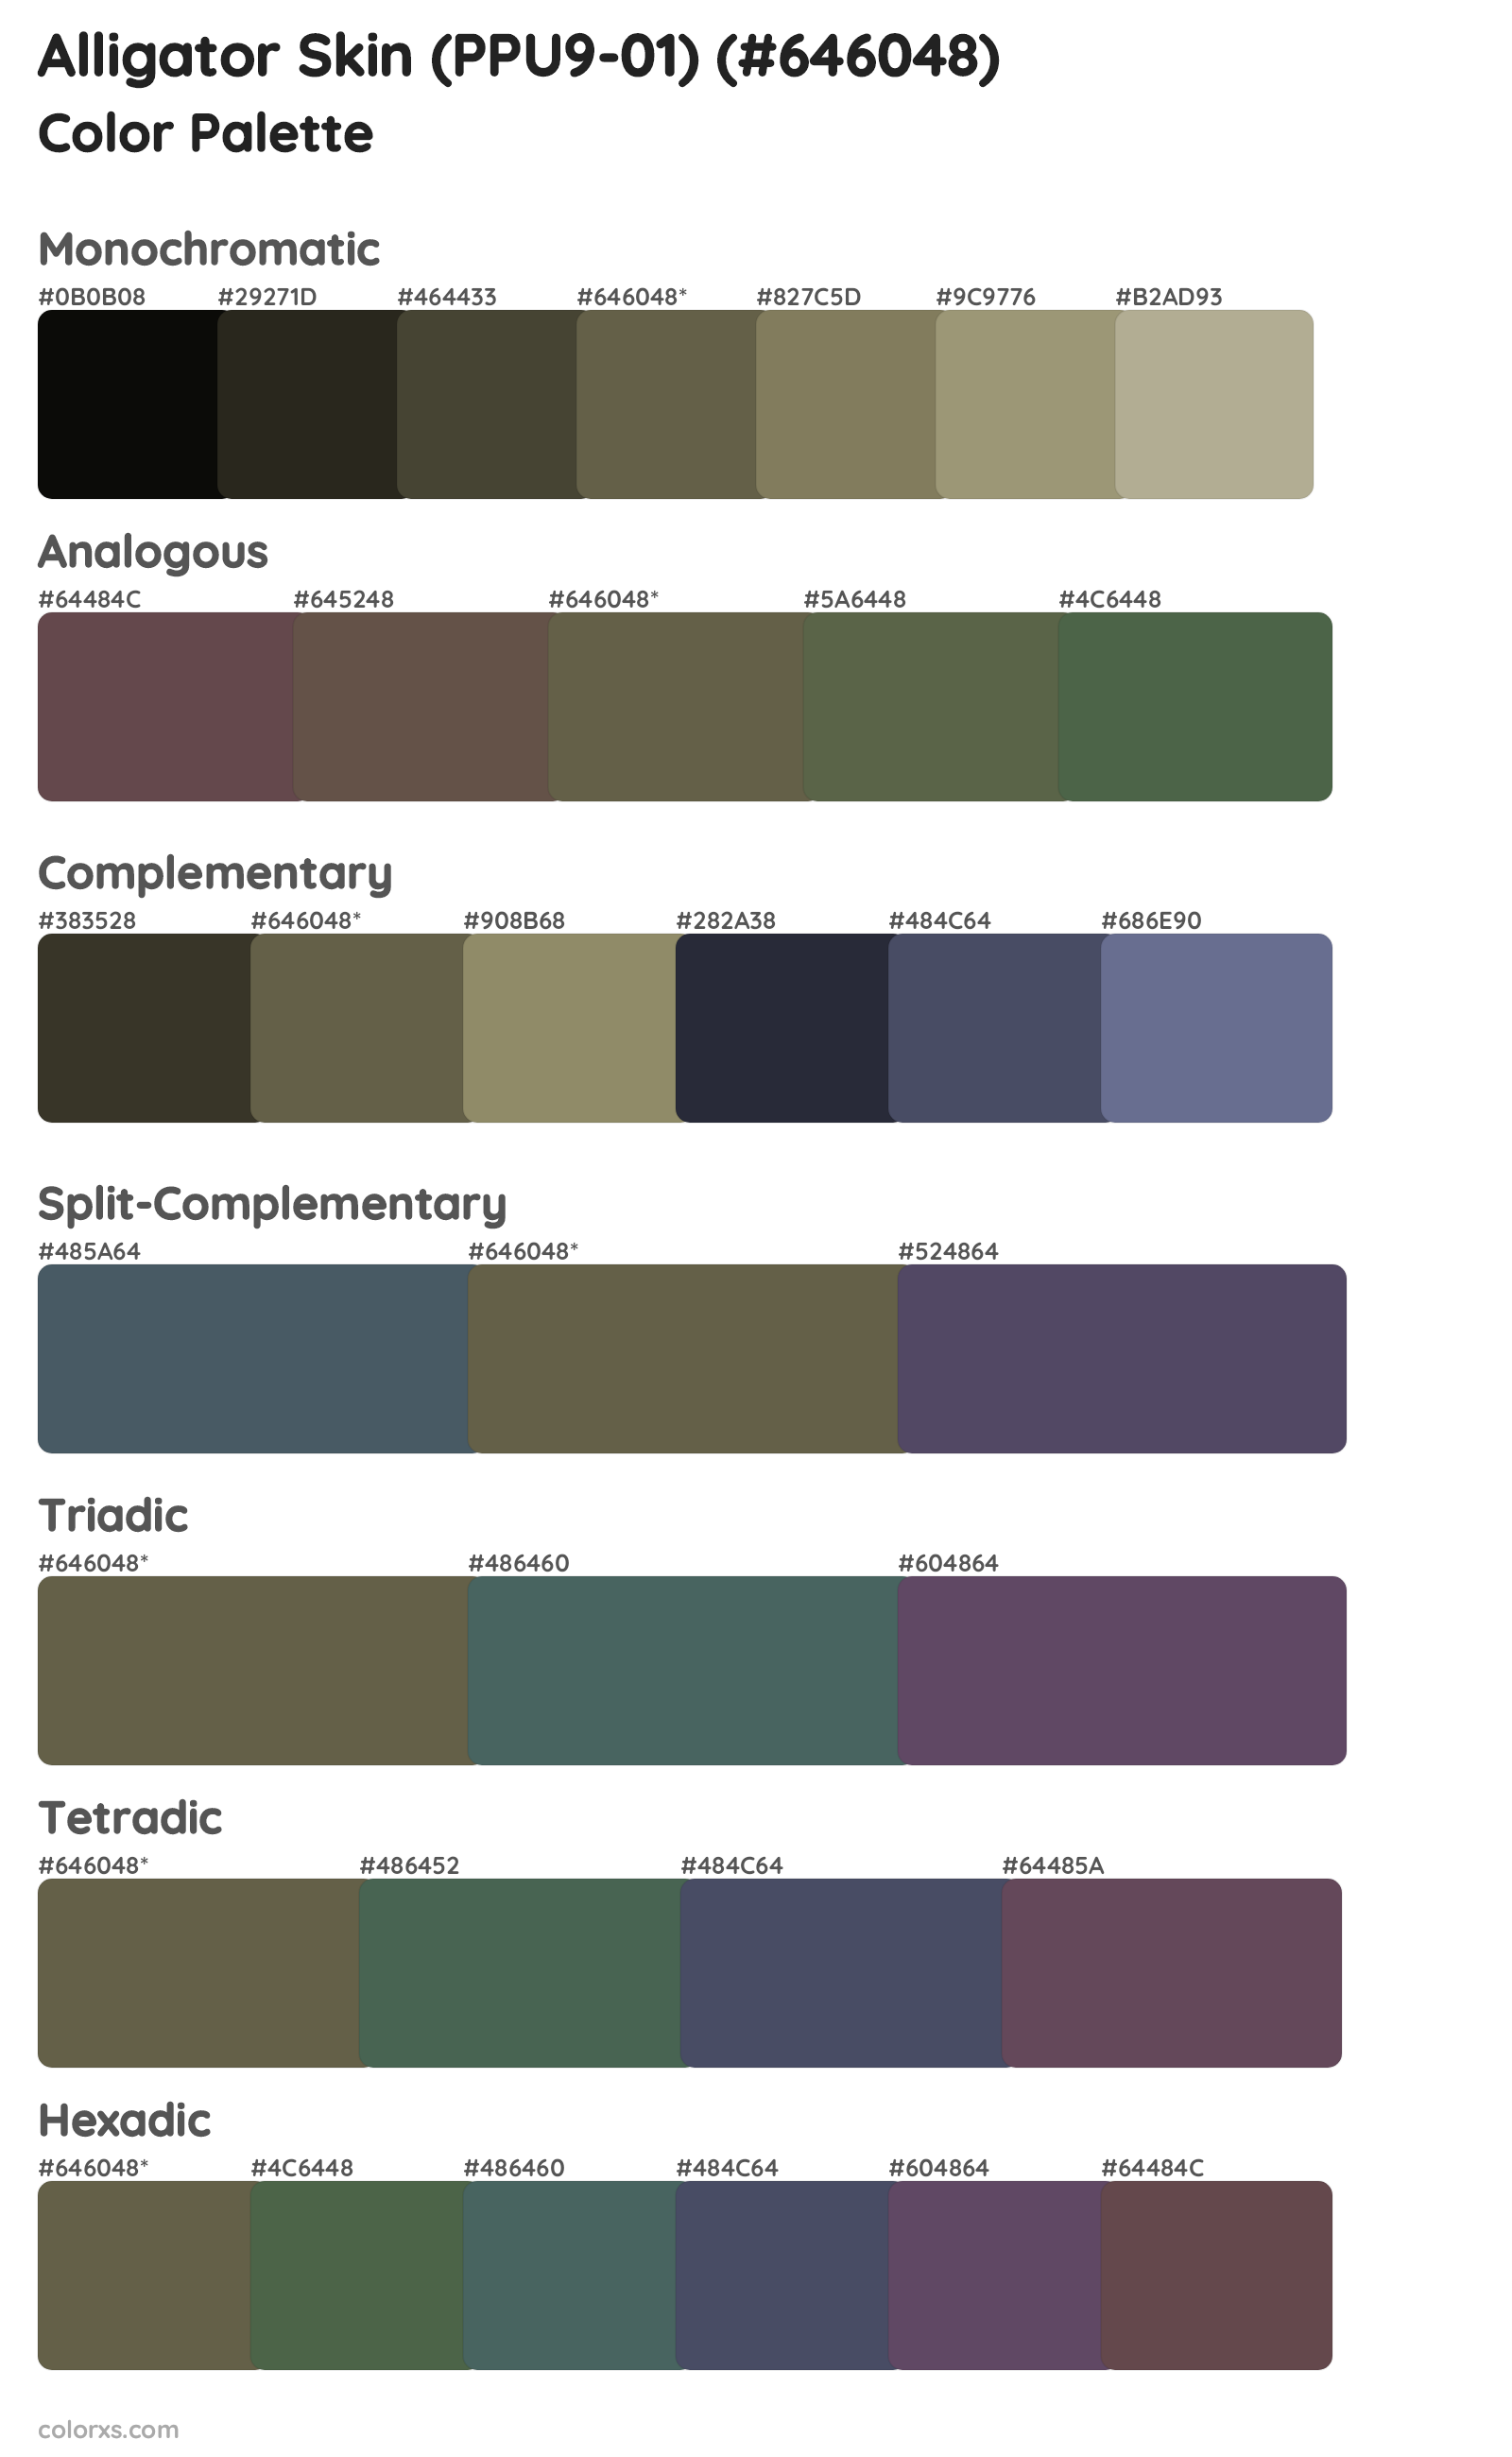 Alligator Skin (PPU9-01) Color Scheme Palettes